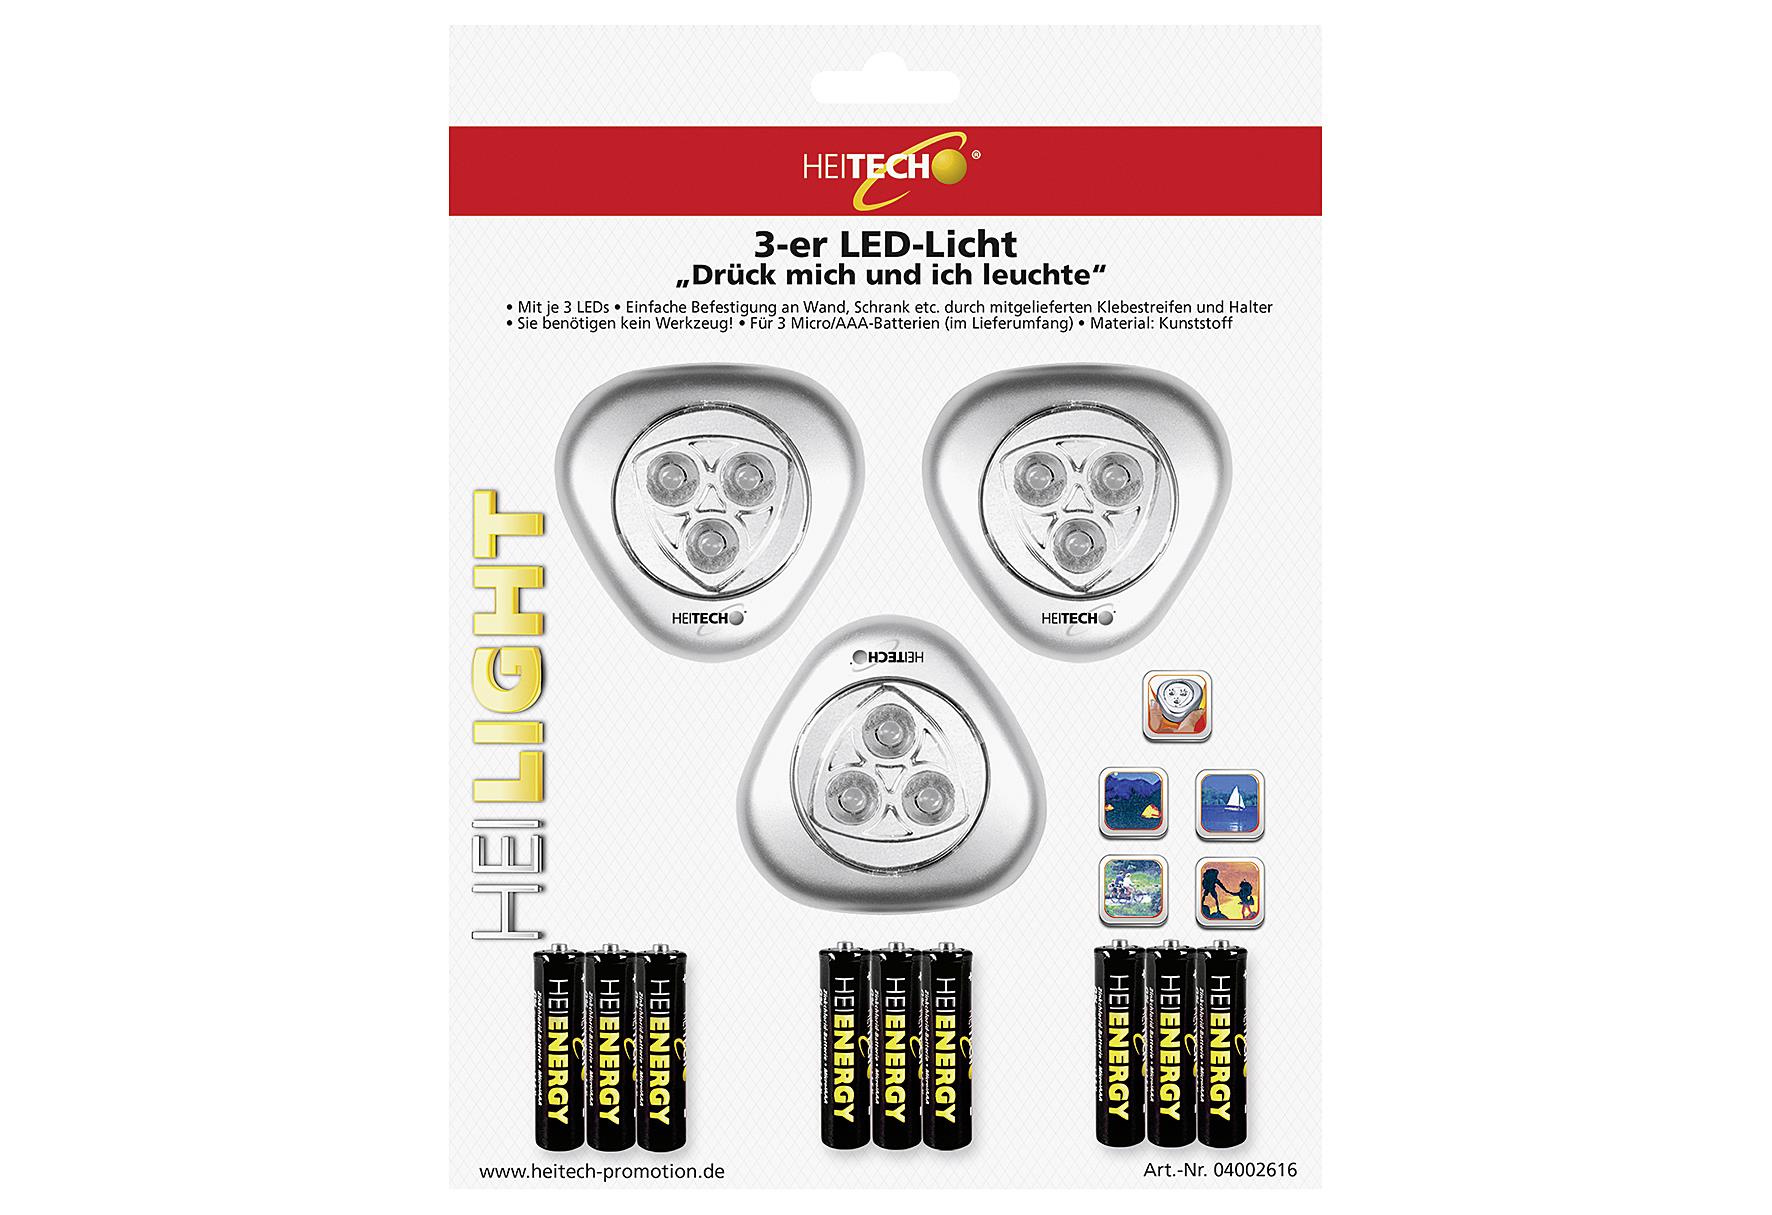 HEITECH LED Unterbau-Leuchten inkl.Batterien 3er Set Je 3 Micro/AAA Batterien im Lieferumfang